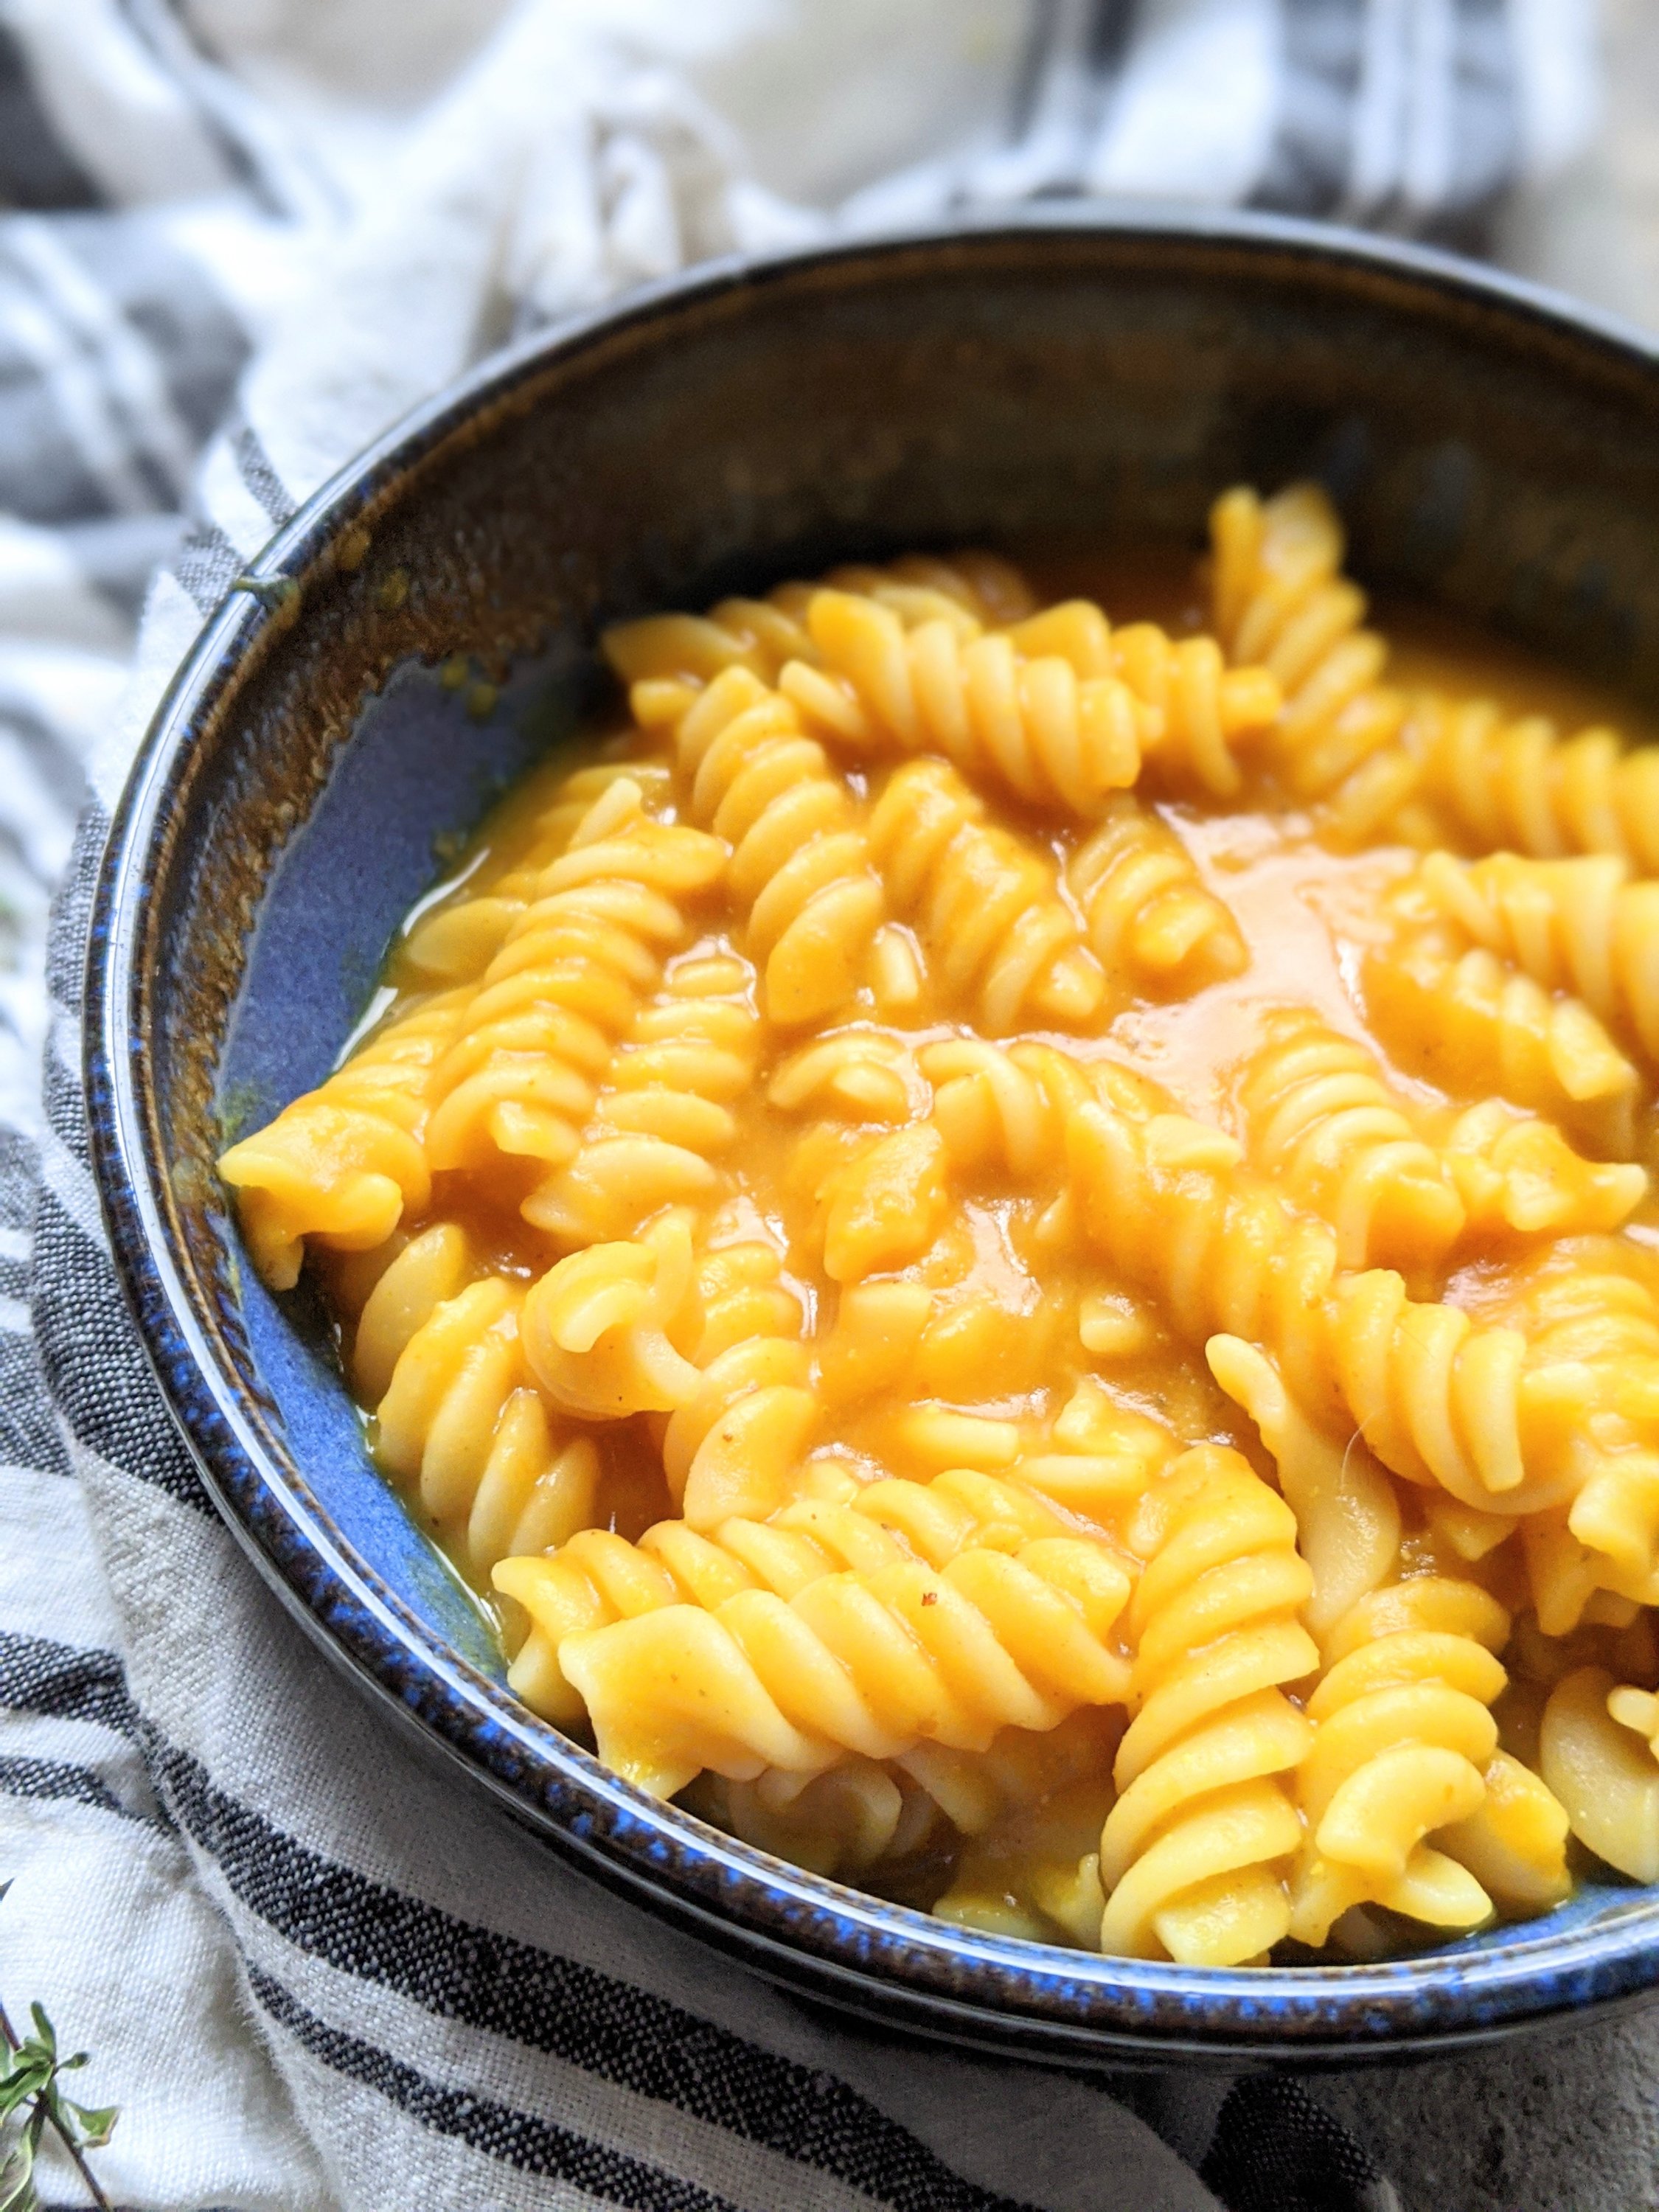 savory pumpkin dishes pasta noodles rotini macaroni healthy vegan gluten free dairy free